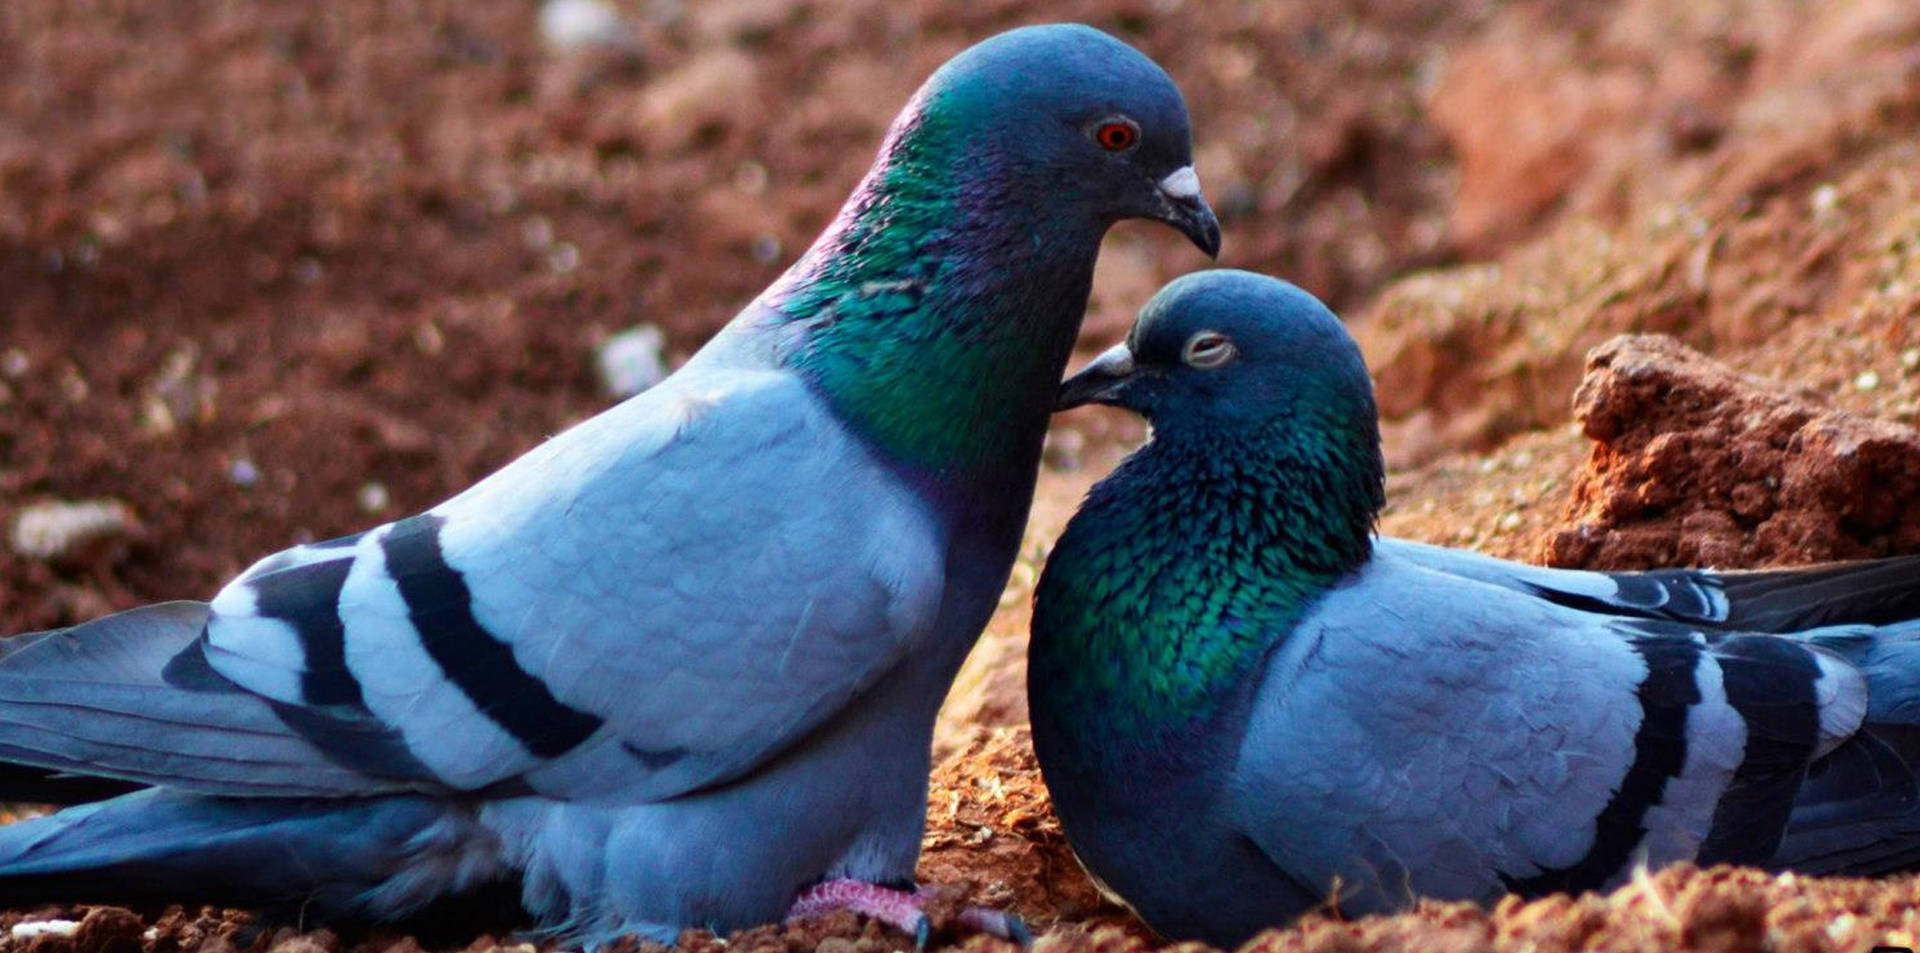 Pigeon Love Birds In Soil Background